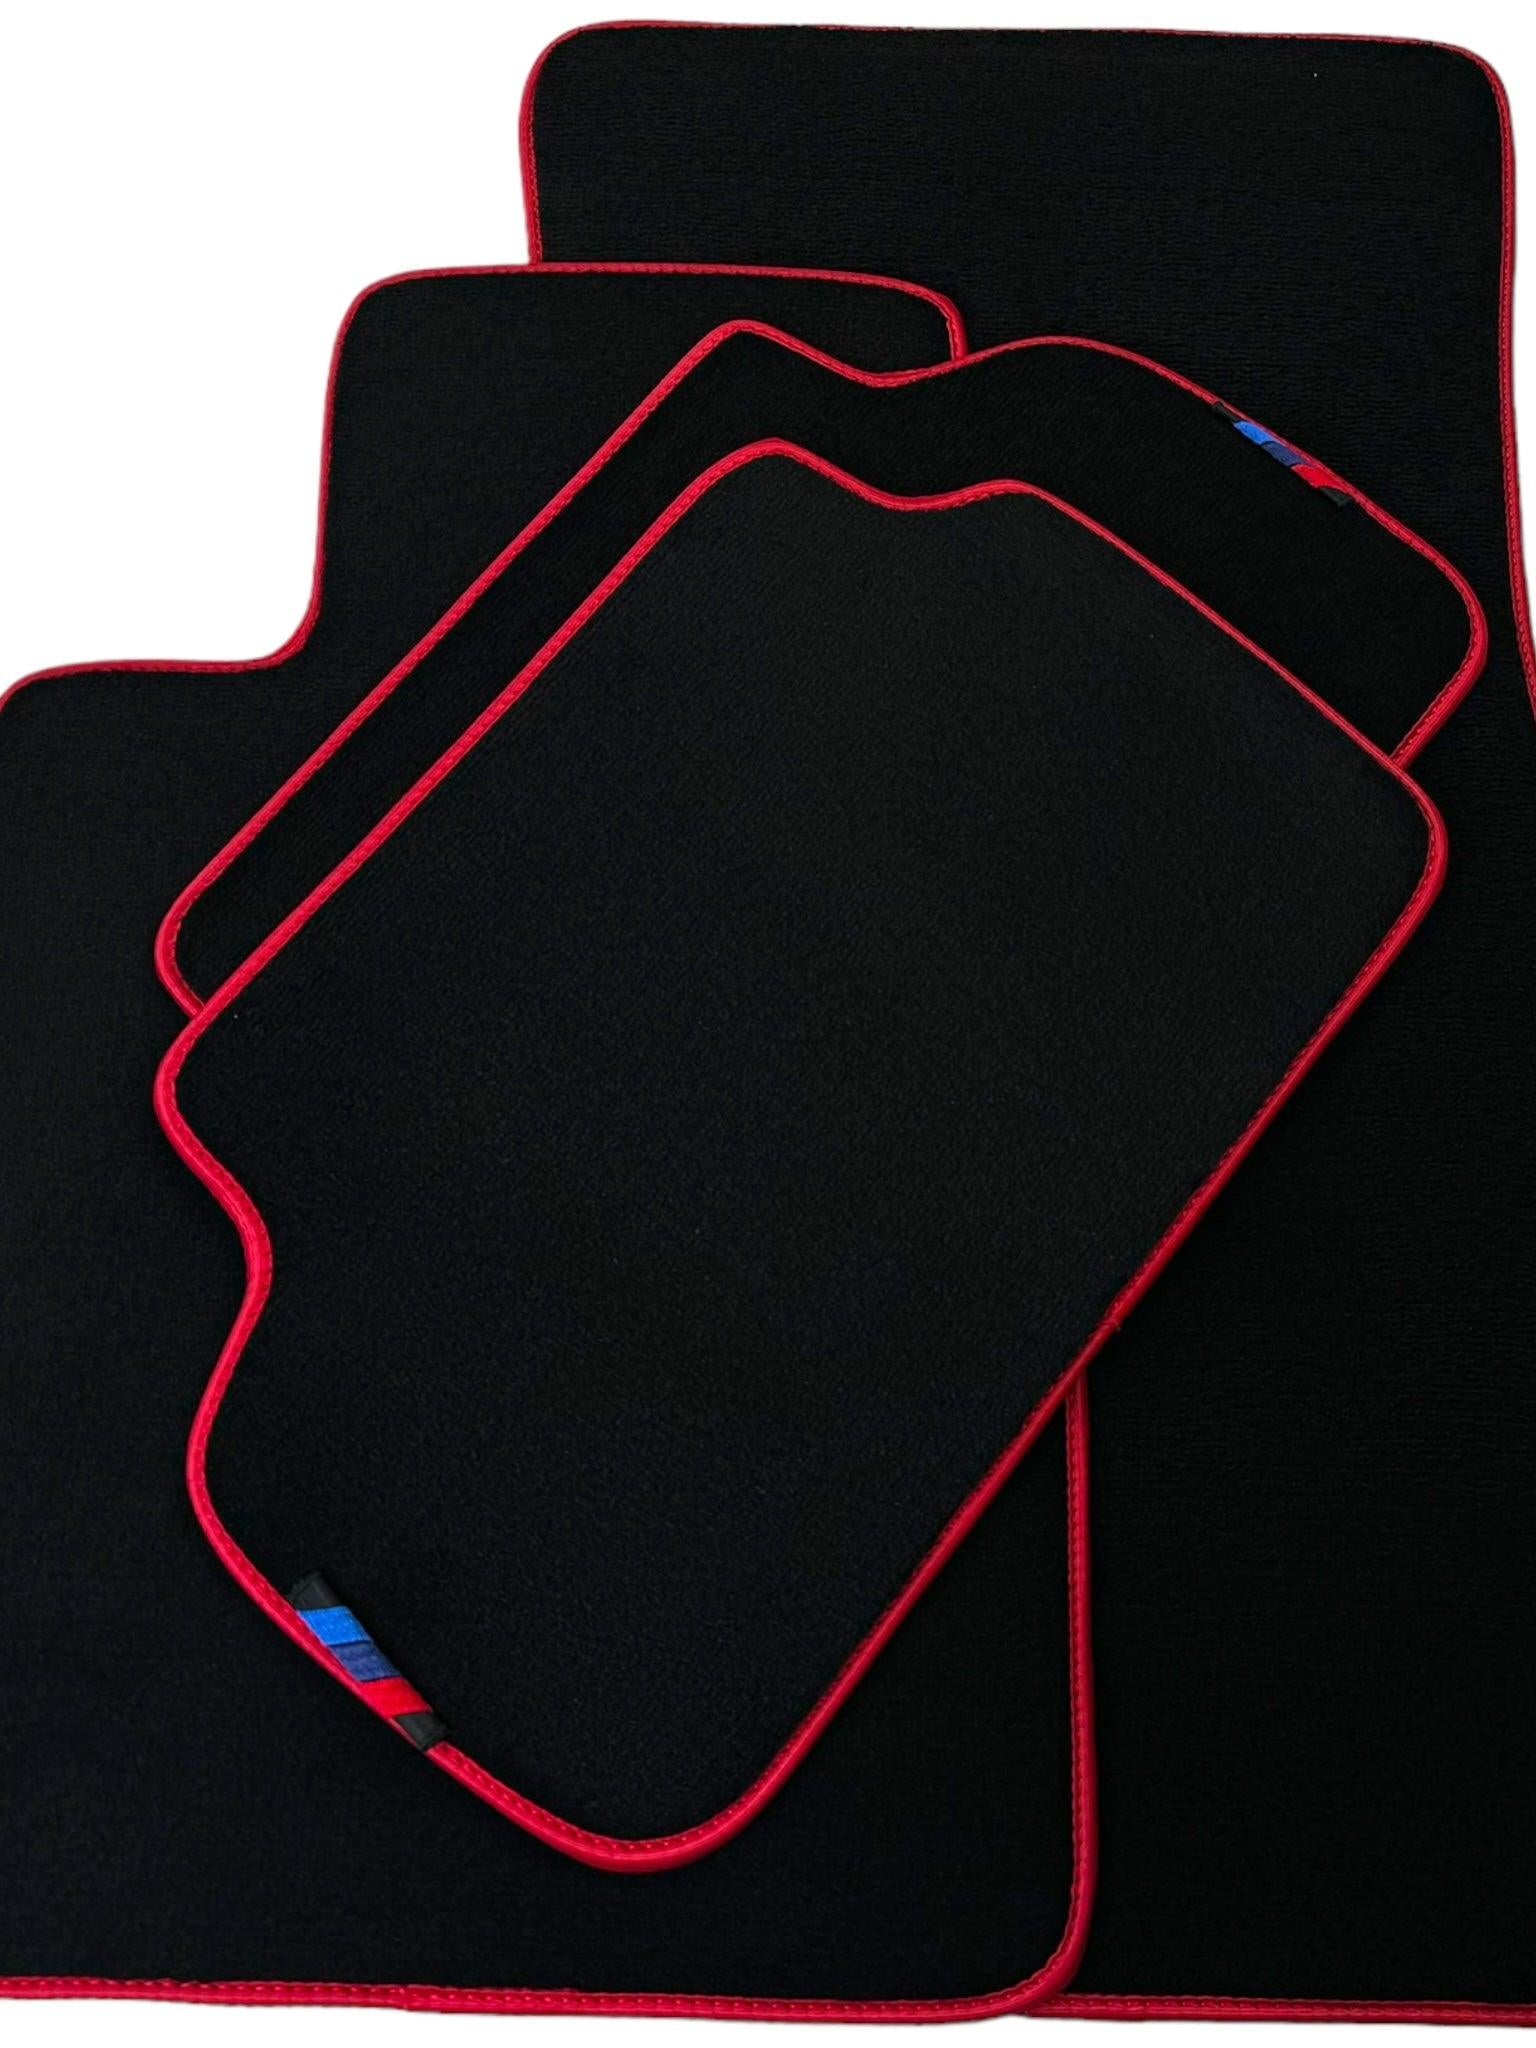 Black Floor Floor Mats For BMW X6 Series E71 | Red Trim